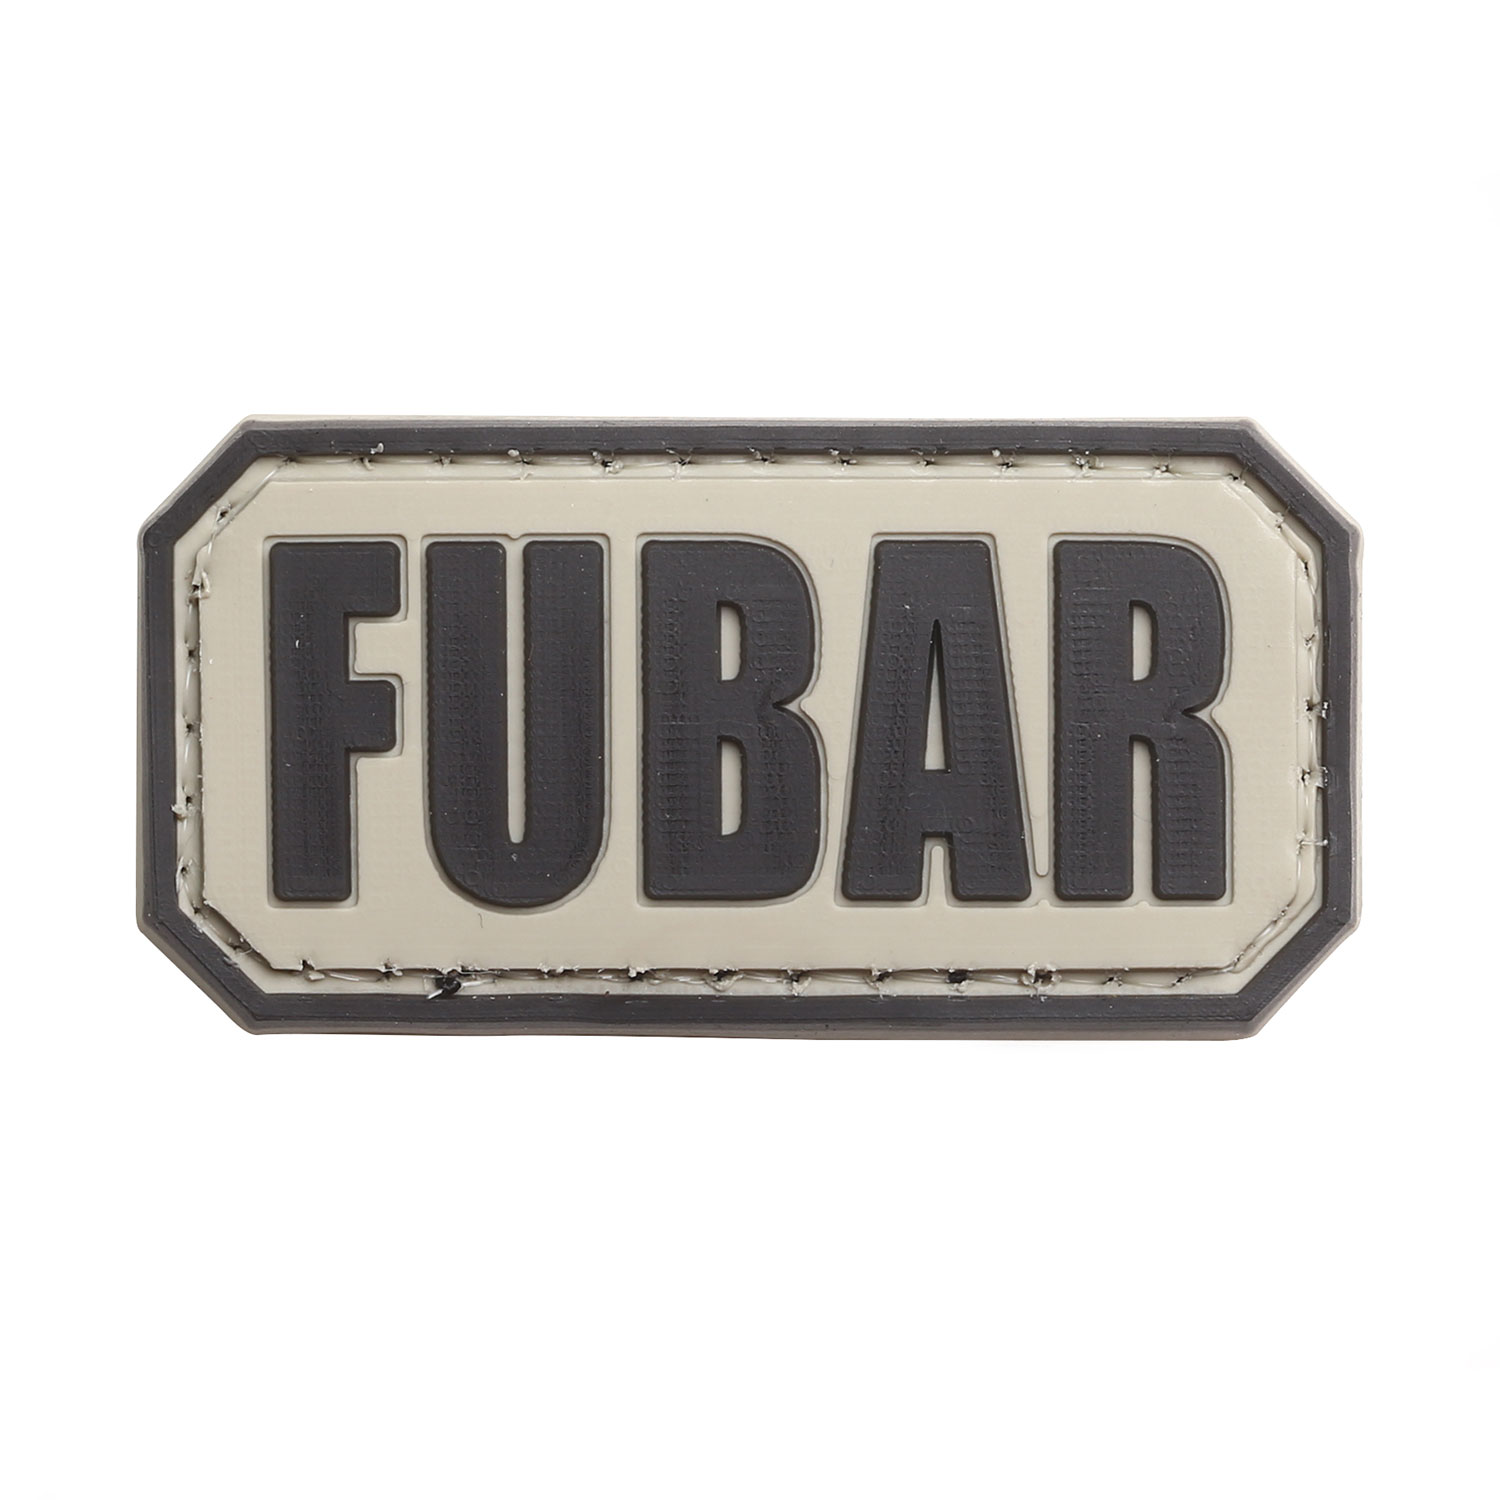 5ive Star Gear “FUBAR” Morale Patch